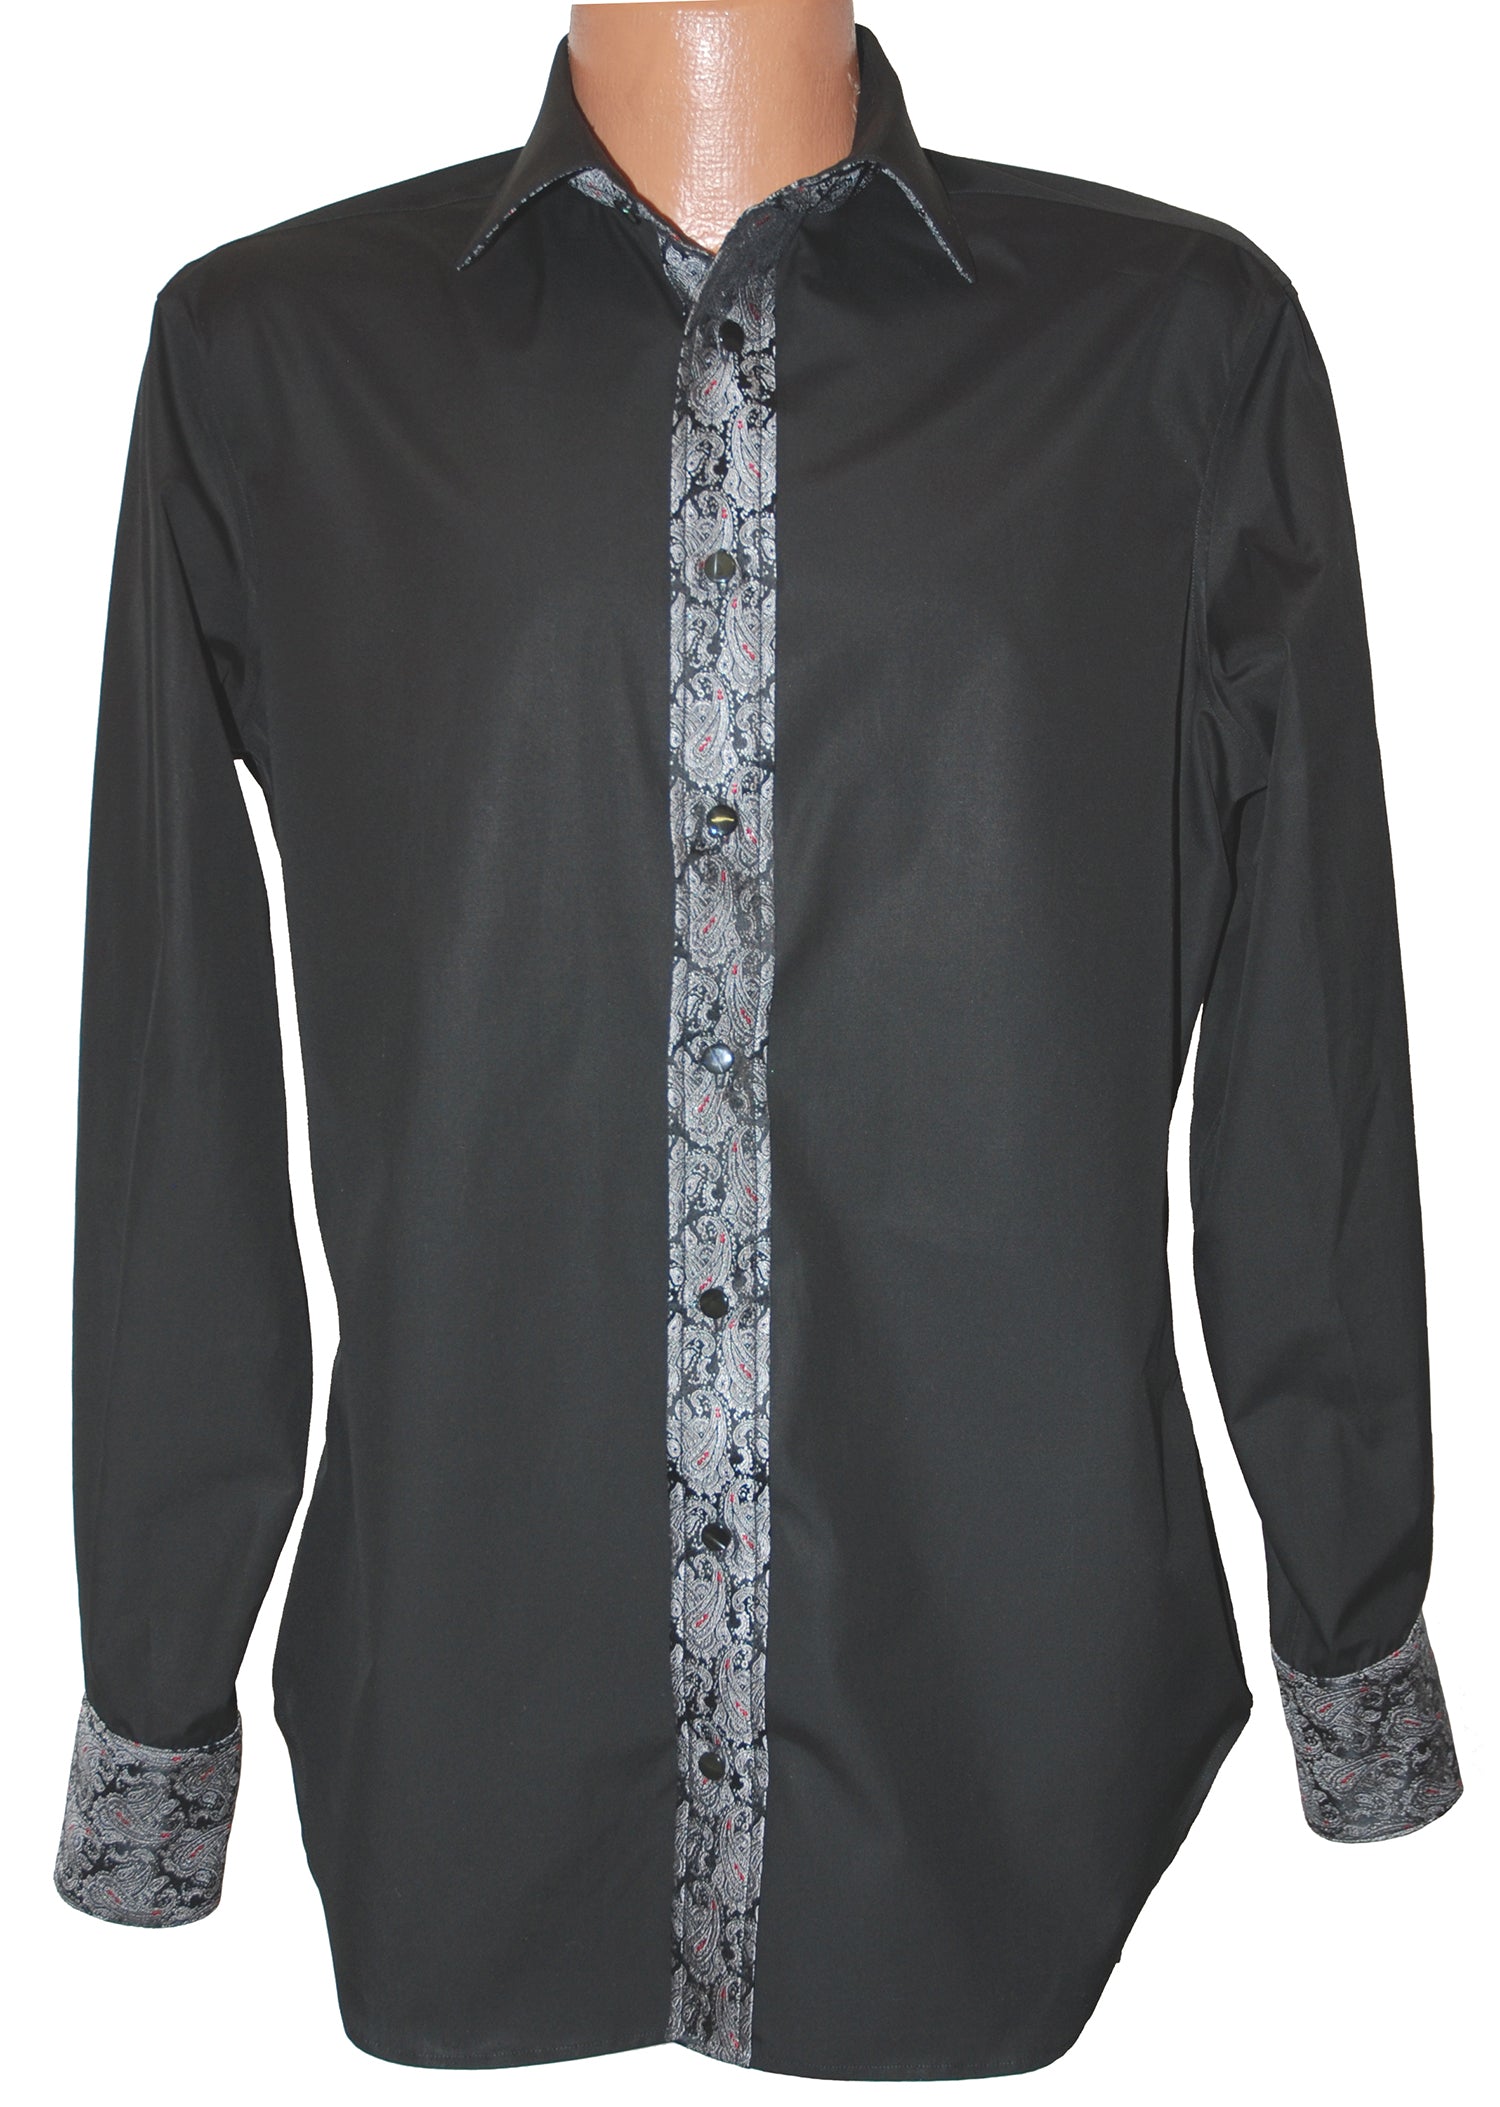 Ordering Bespoke Shirts and Blouses – CustomShirt1.com